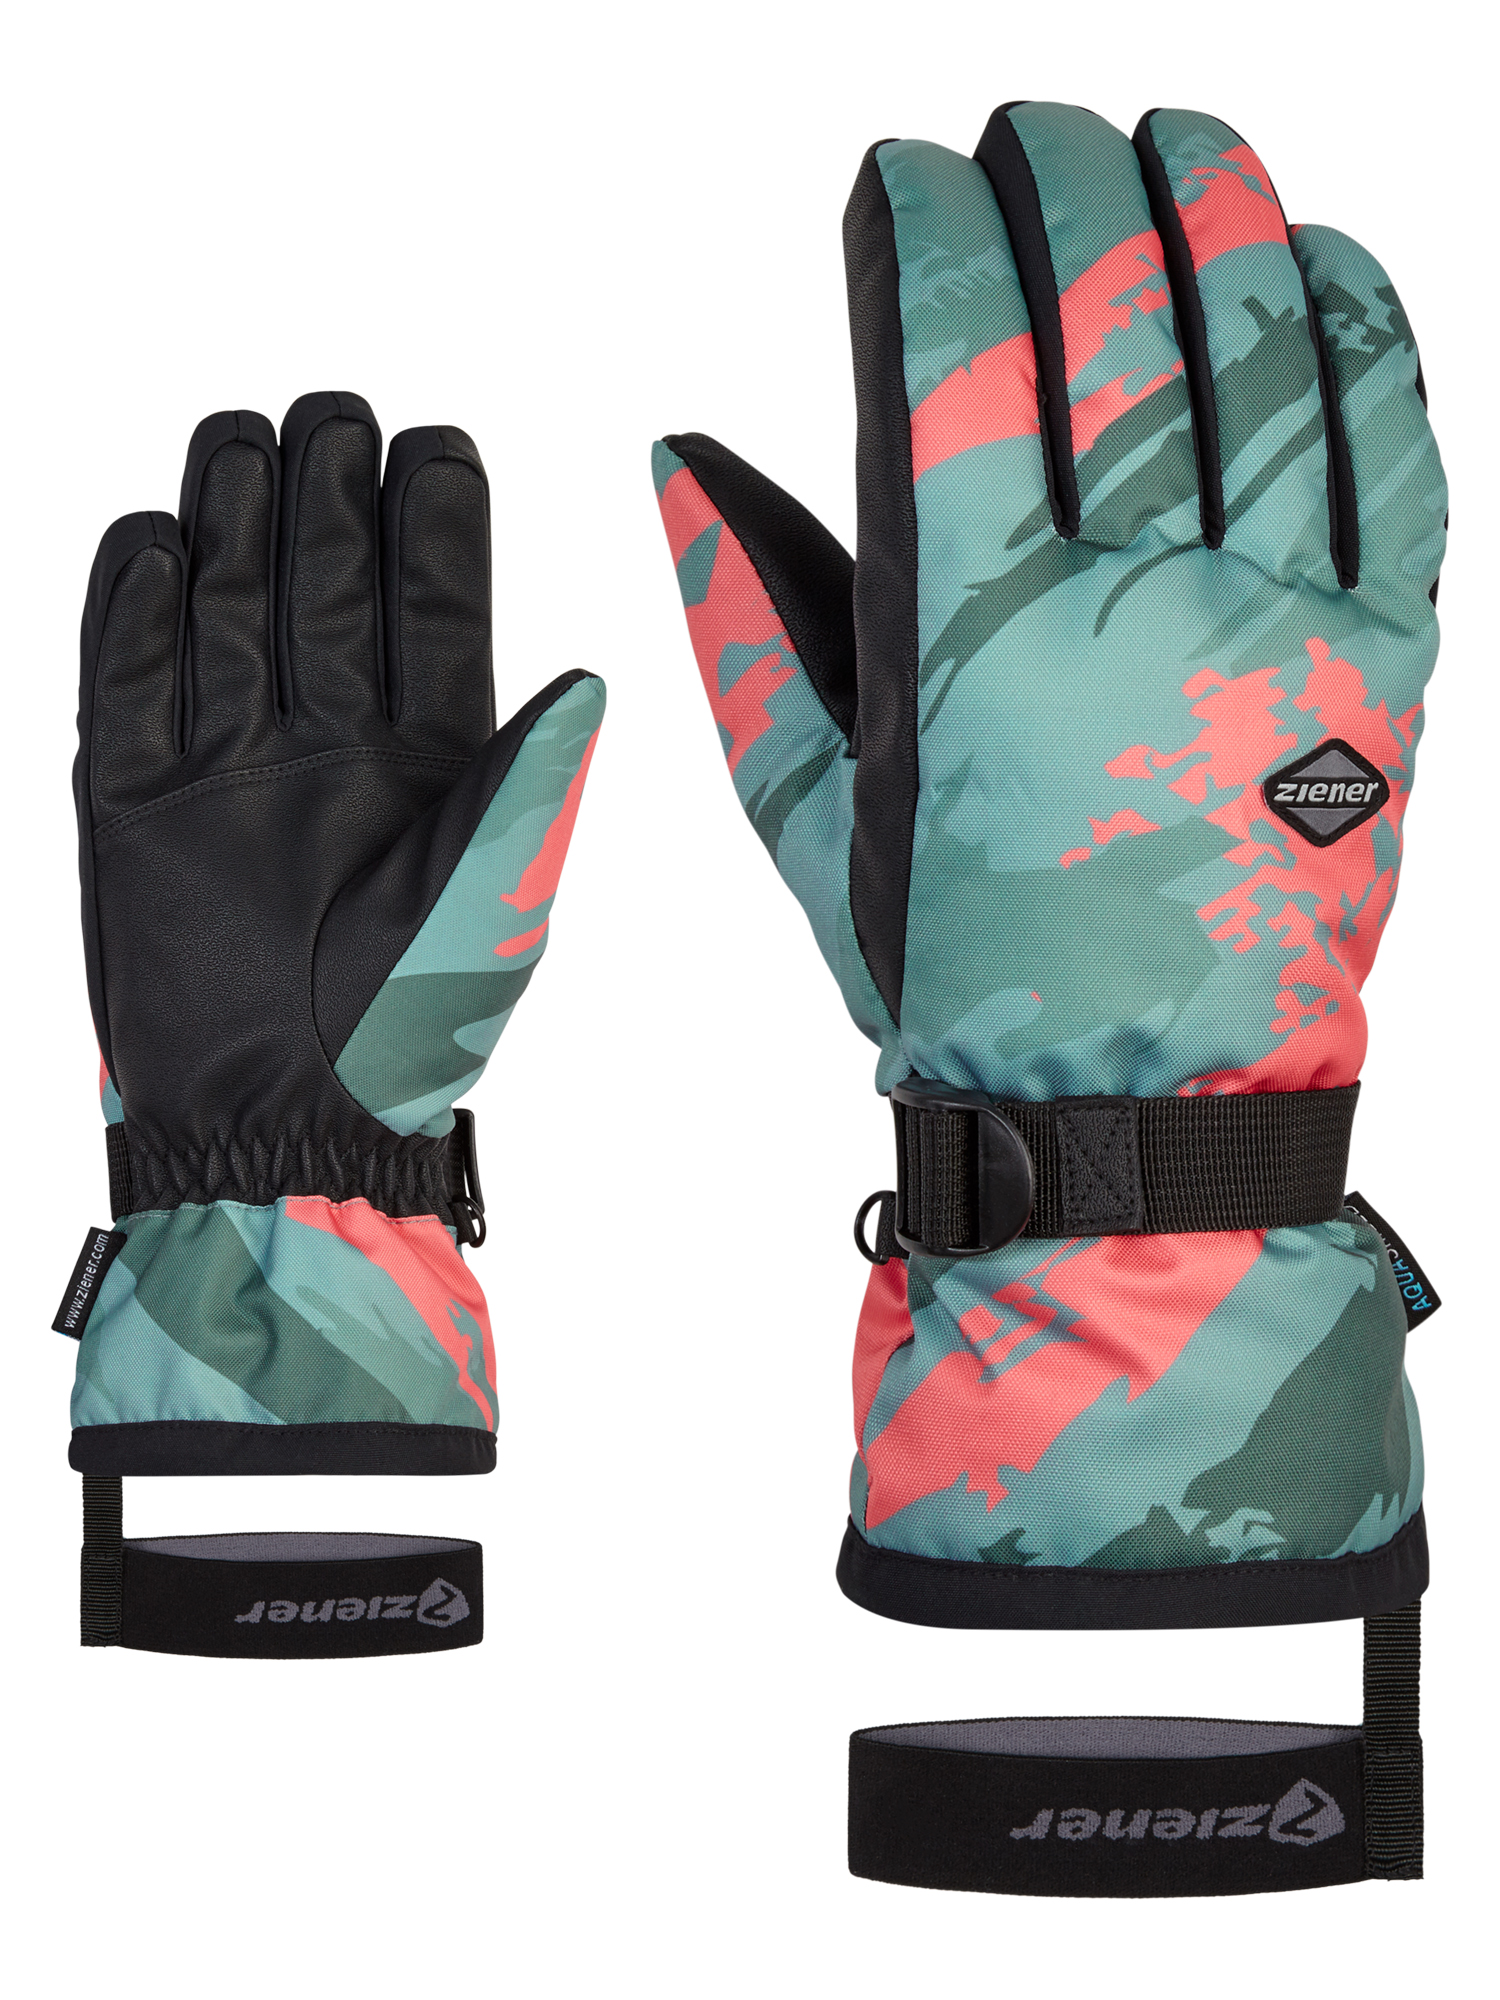 Handschuhe glove - seal.vibrant ski 231000 - gray peach - AS GASSIM alpine Artikelnummer: 286464